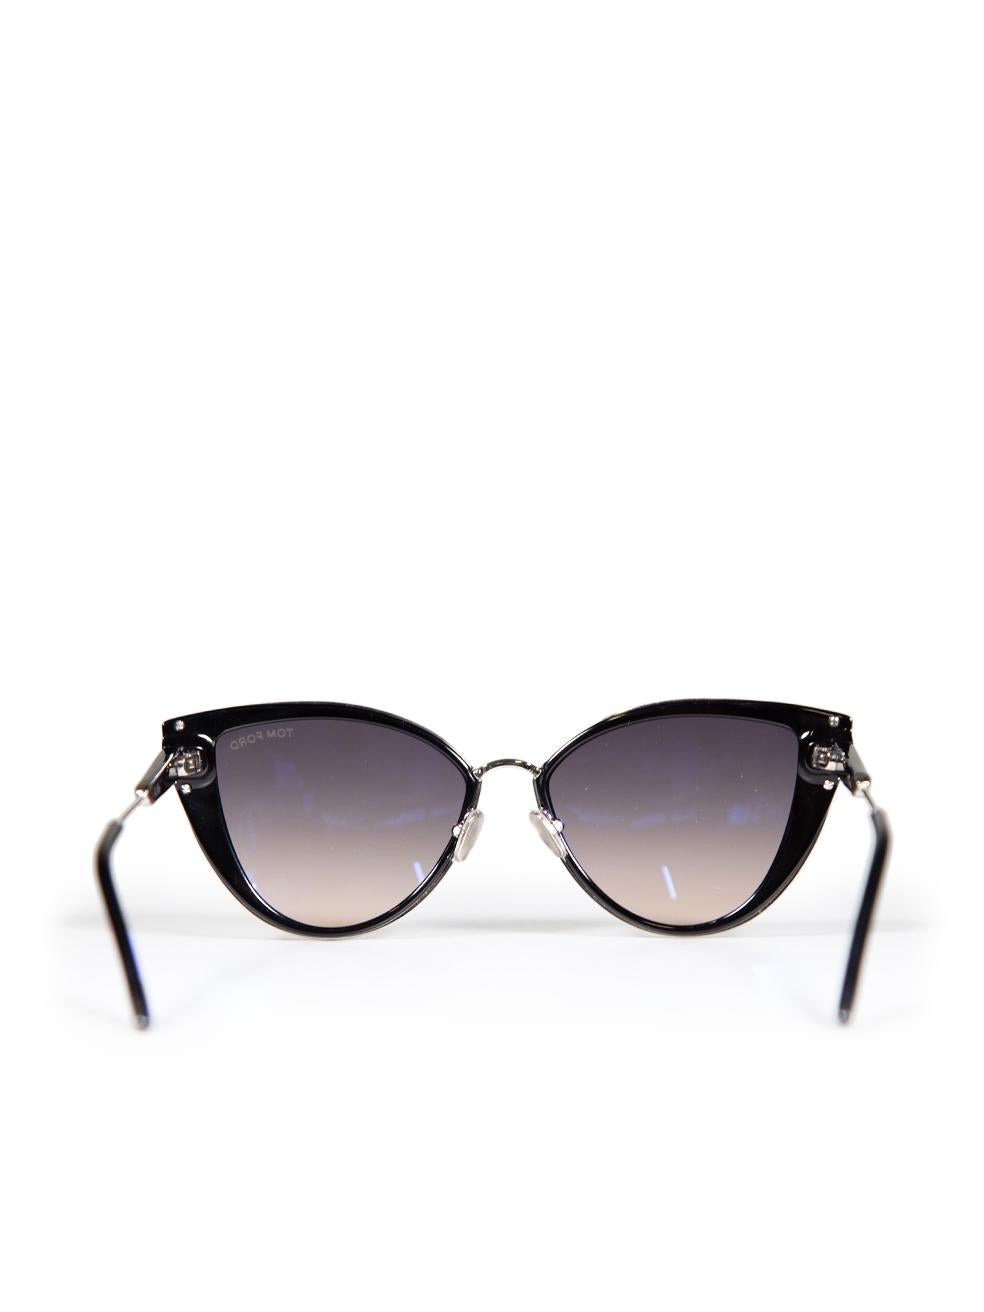 Women's Tom Ford Shiny Black Anjelica Sunglasses For Sale